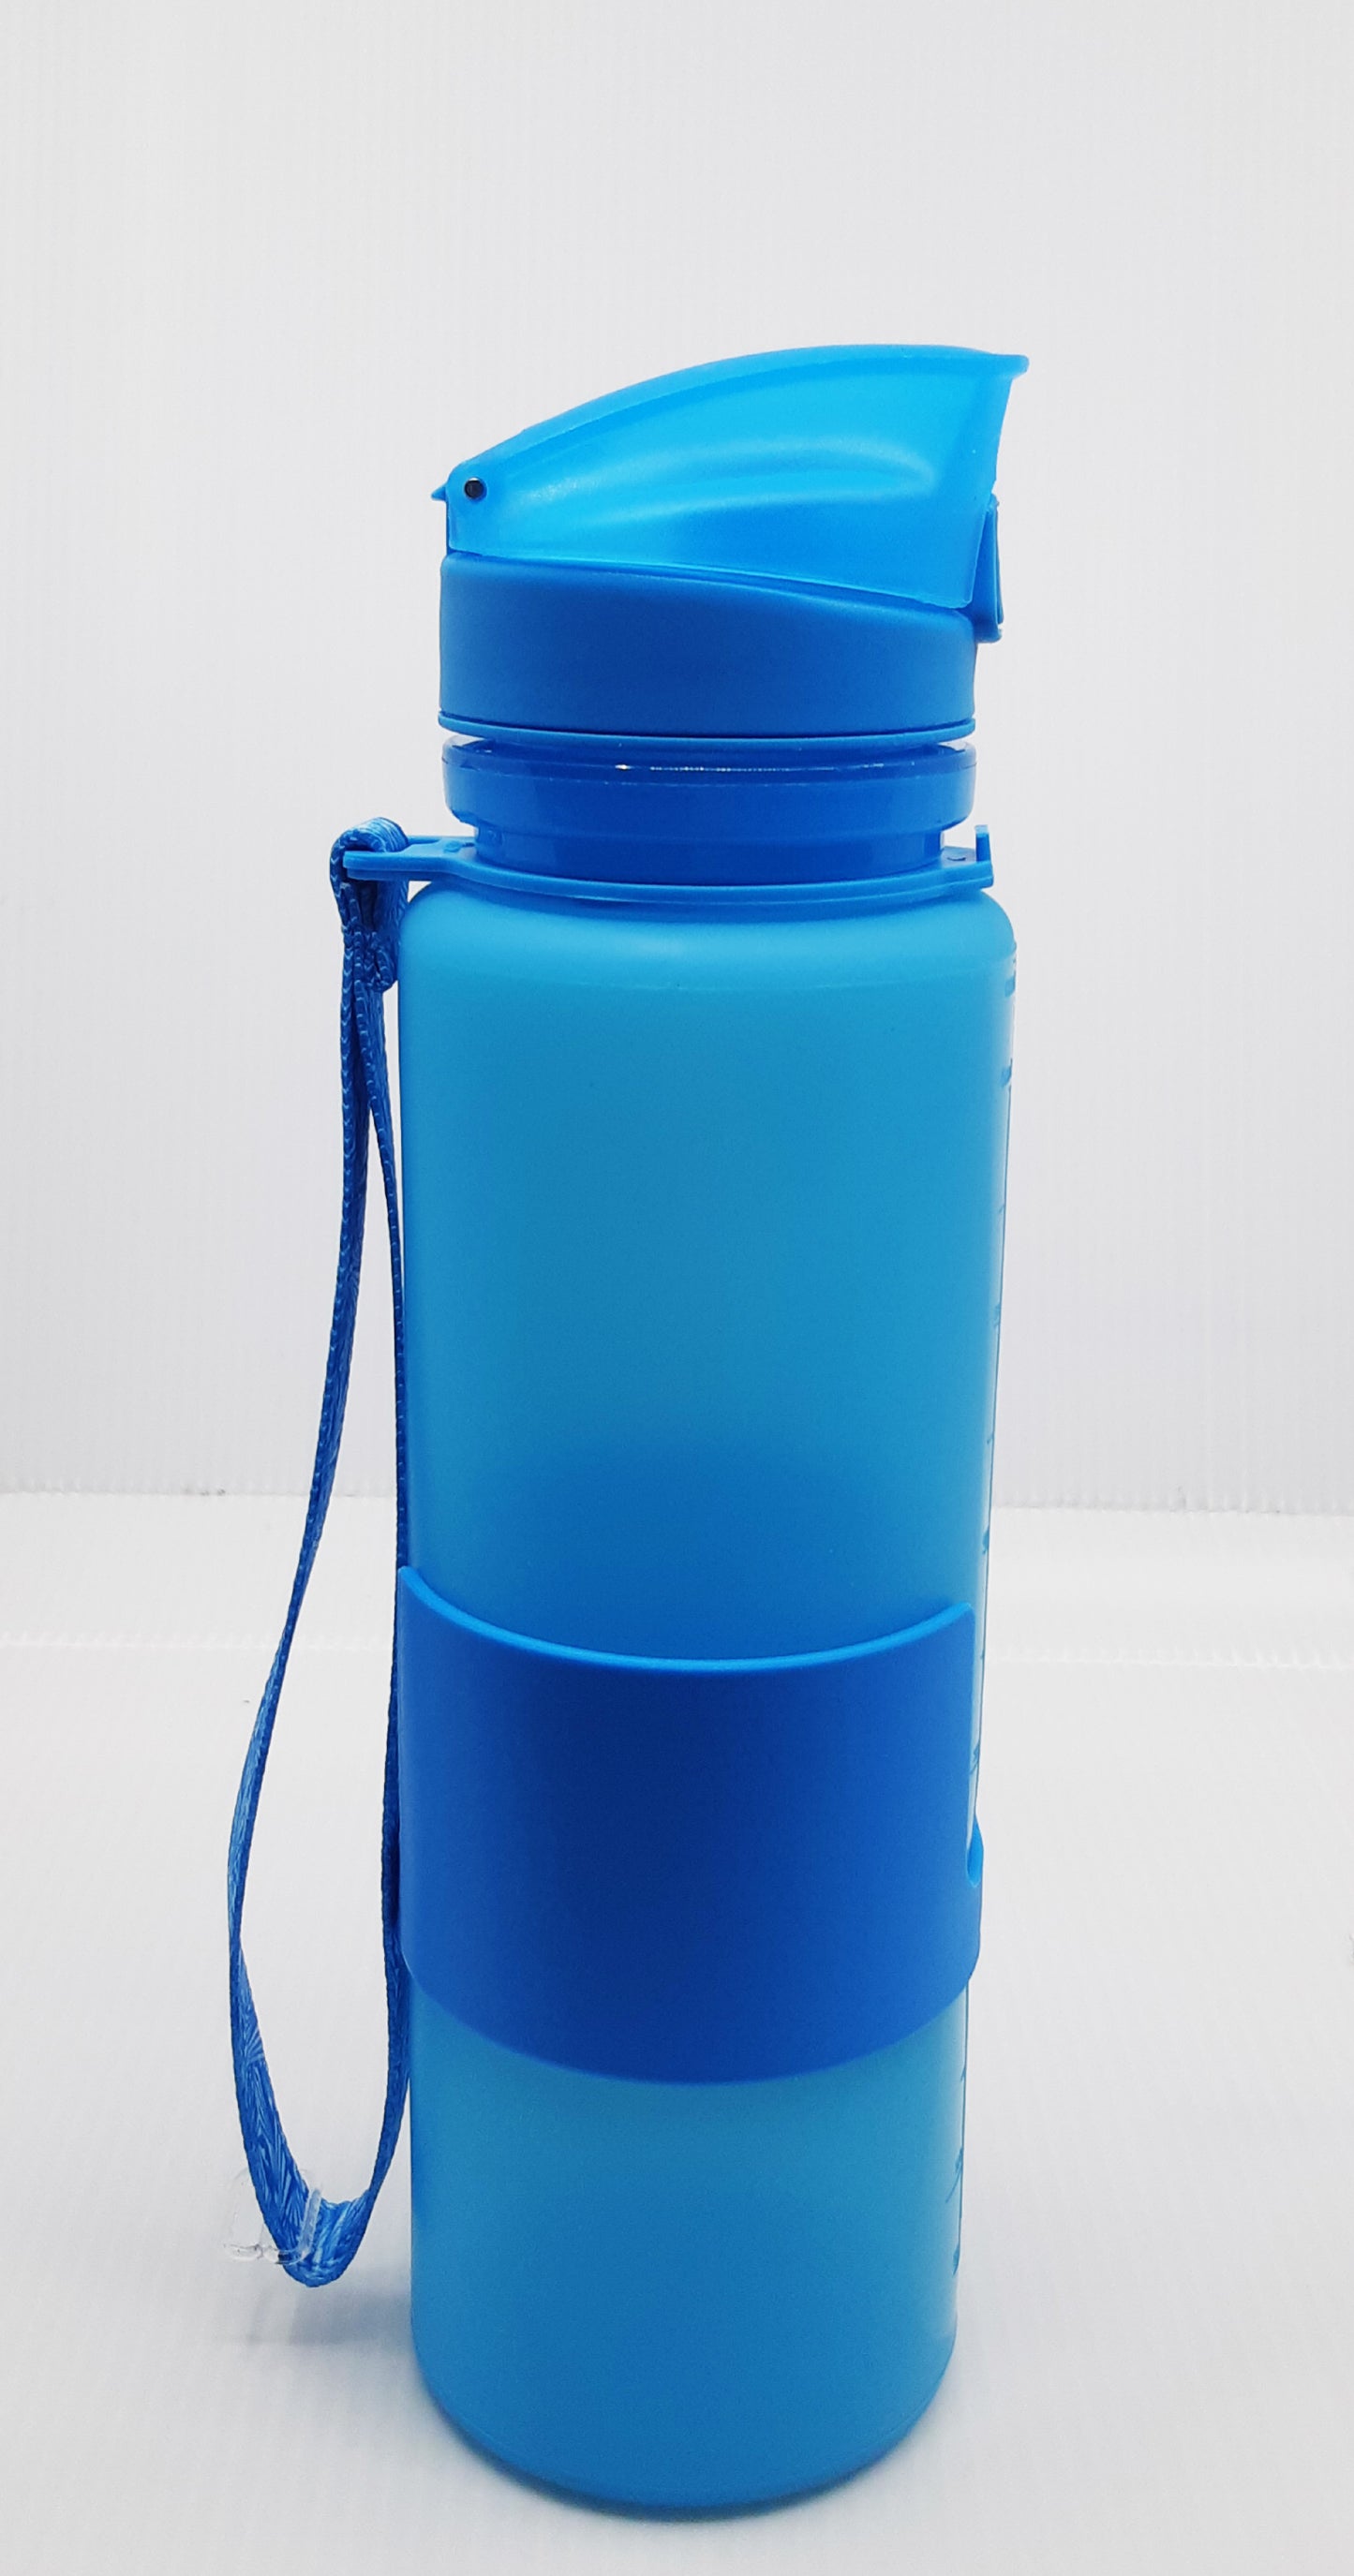 ZR-K033 - Silicone Water Bottle/Blue